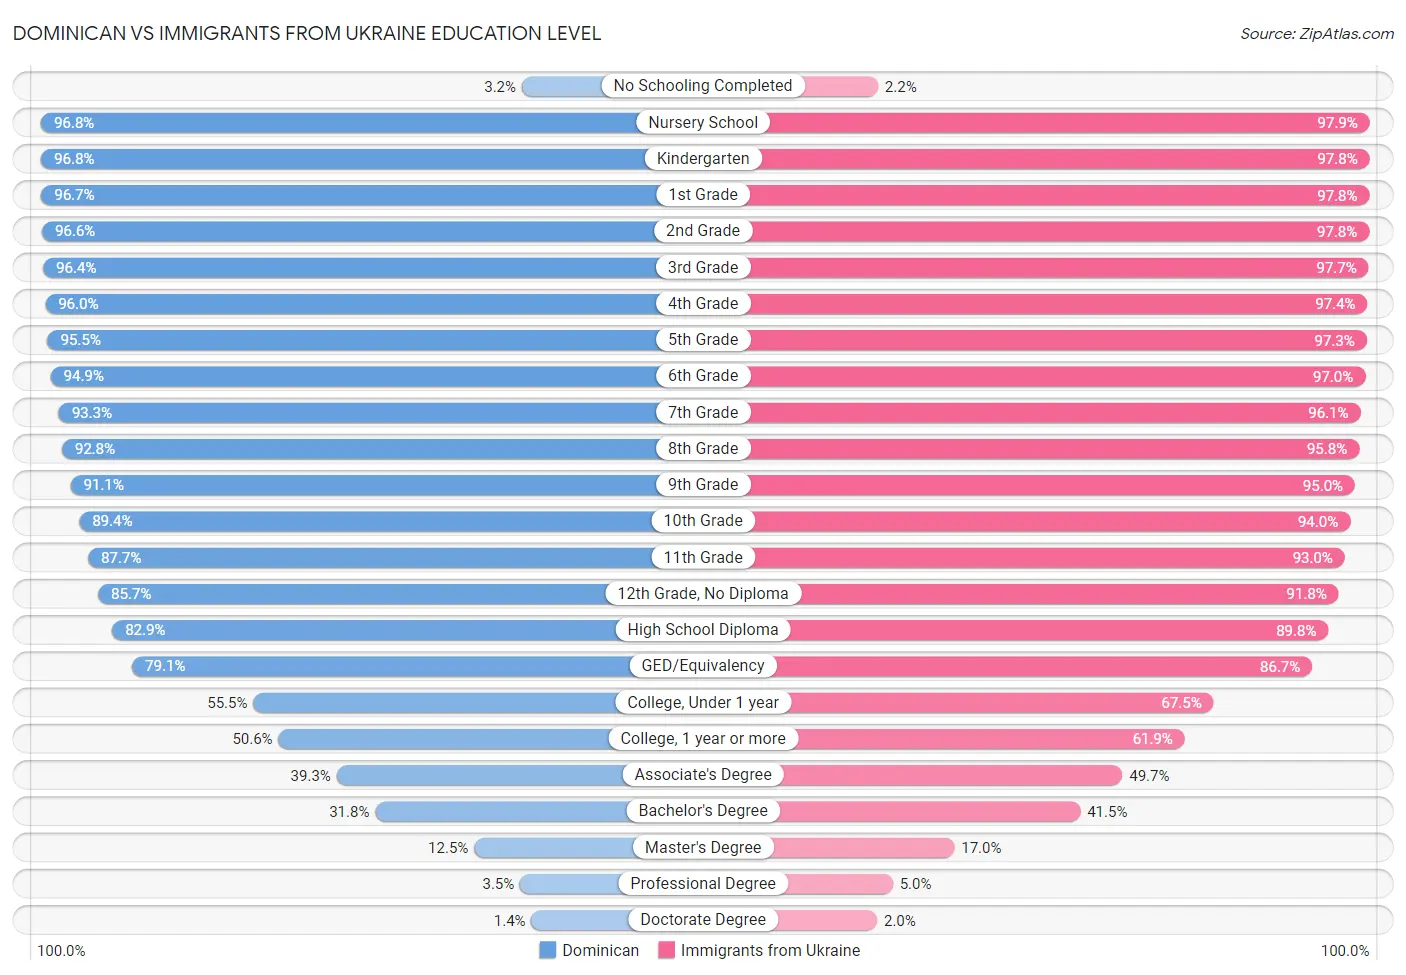 Dominican vs Immigrants from Ukraine Education Level